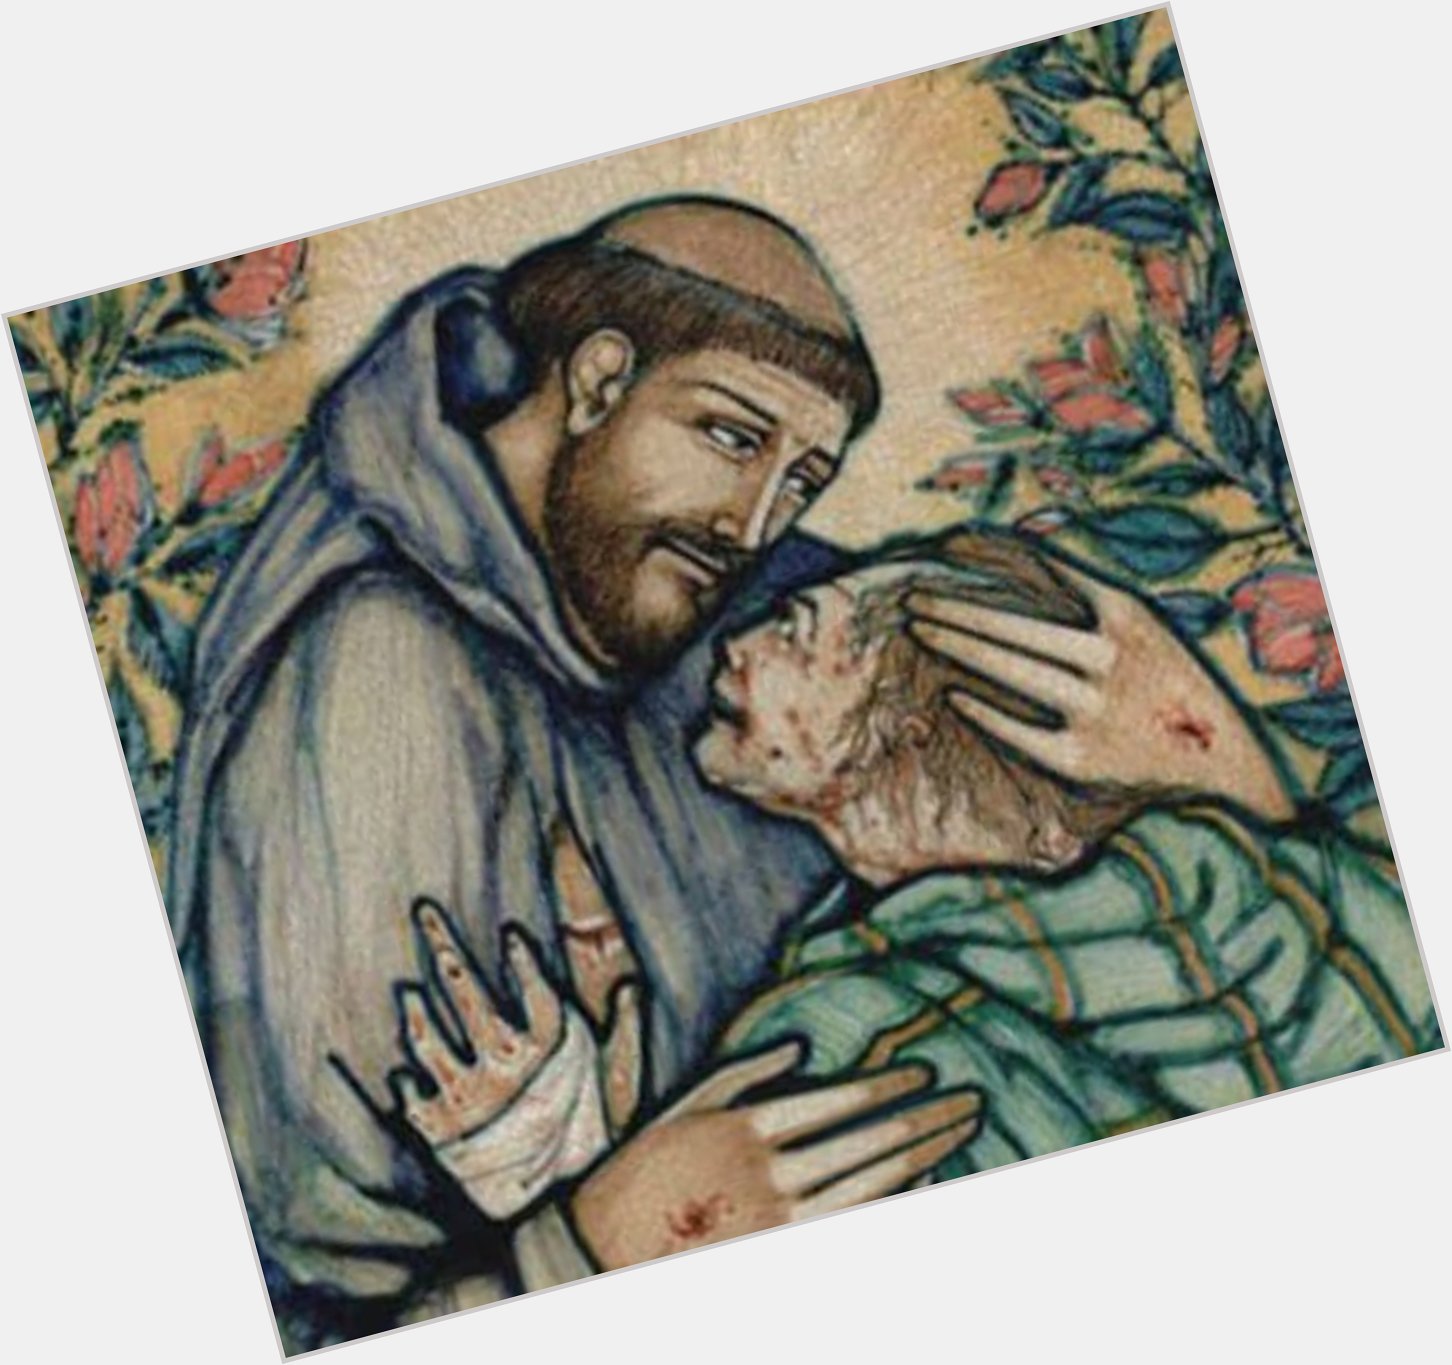 Francis Of Assisi dating 6.jpg